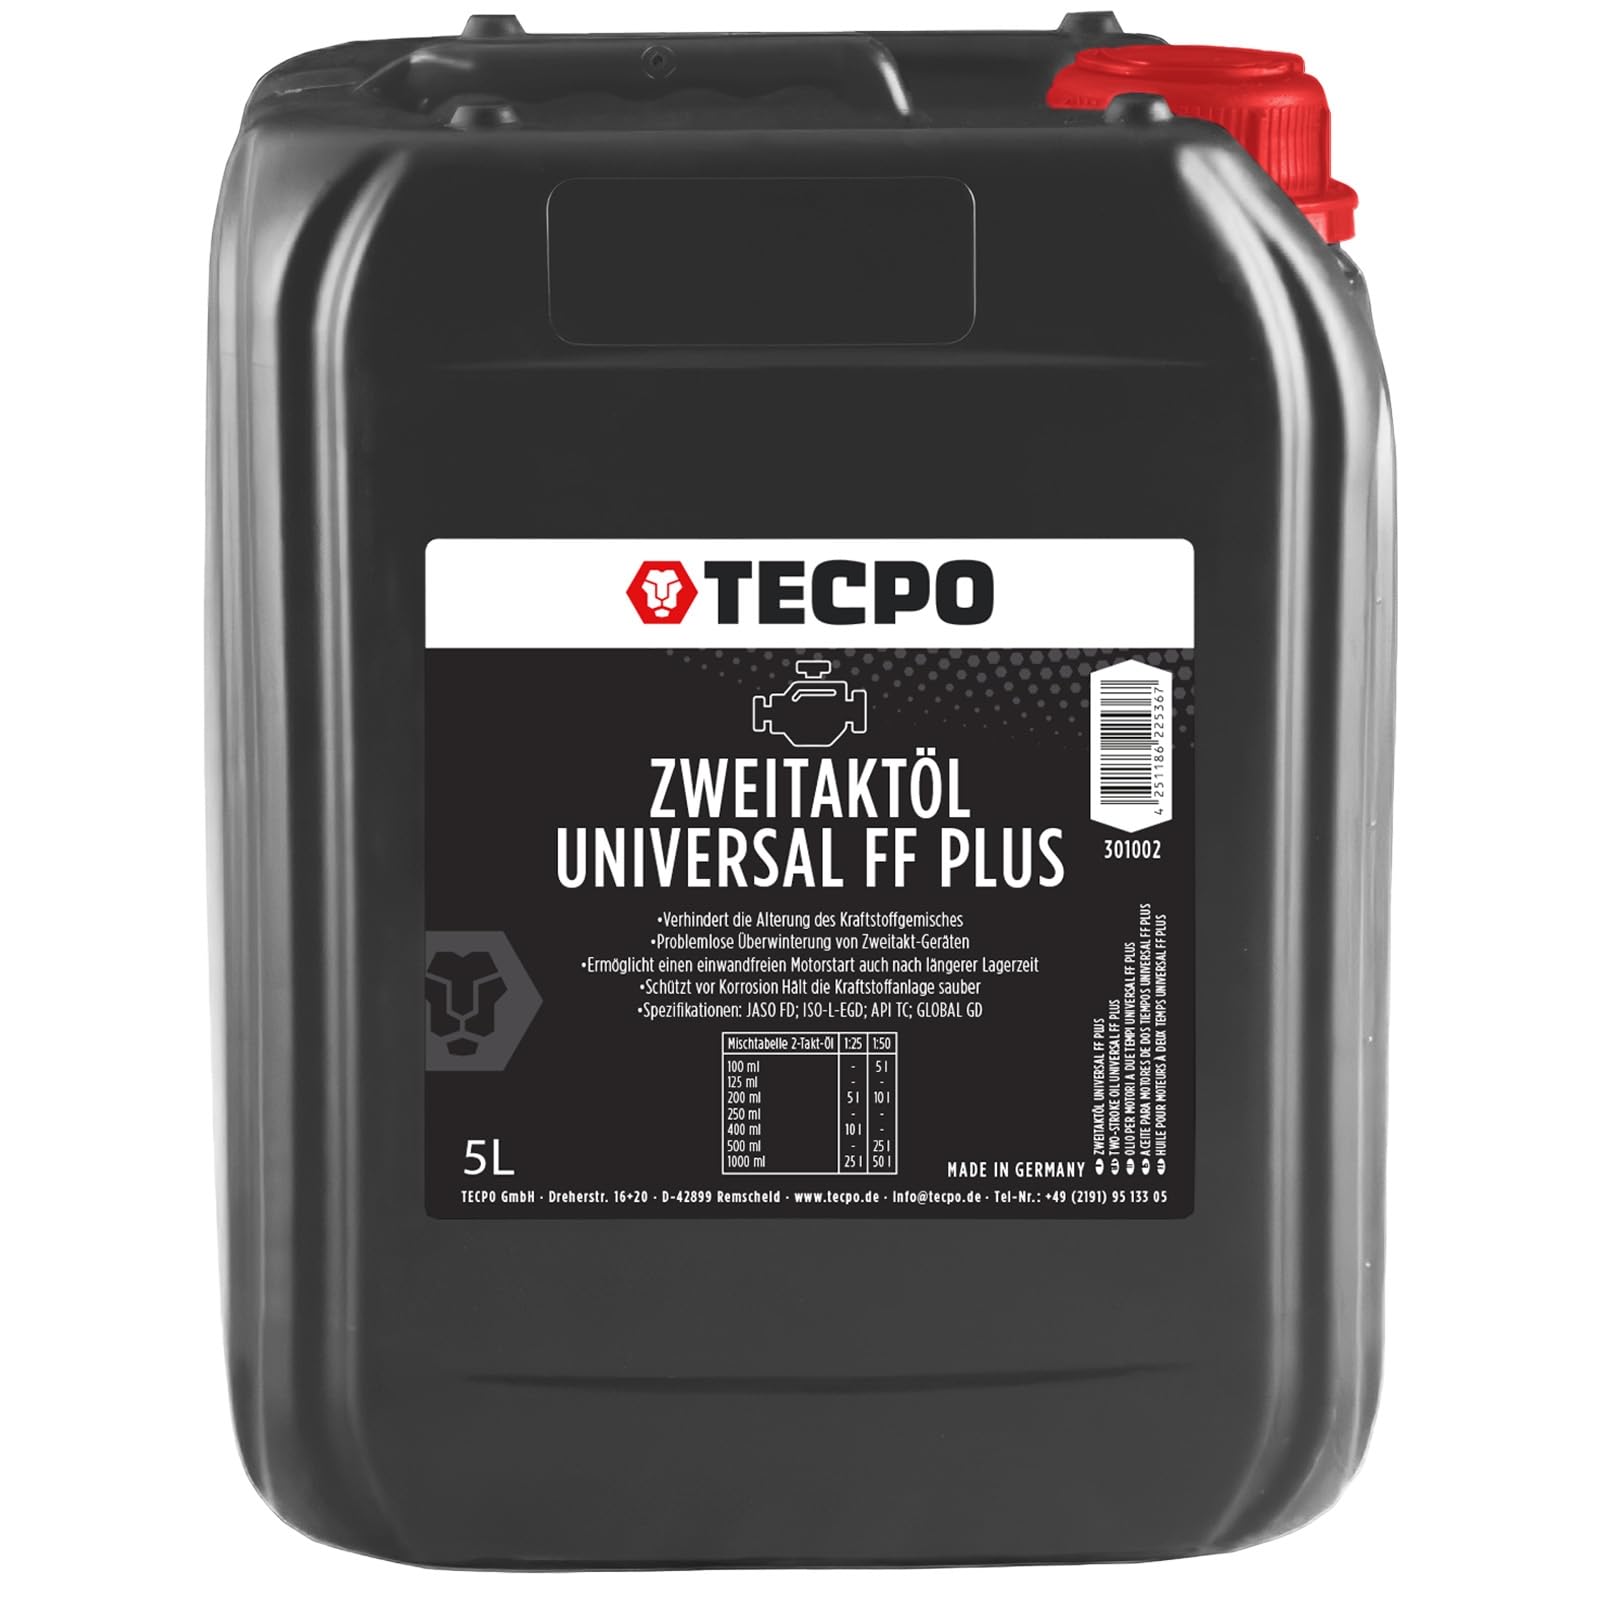 TECPO 2-Takt Öl FF Plus Universal, 5 Liter Zweitaktöl Mischöl JASO FD API TC ISO-L-EGD von TECPO